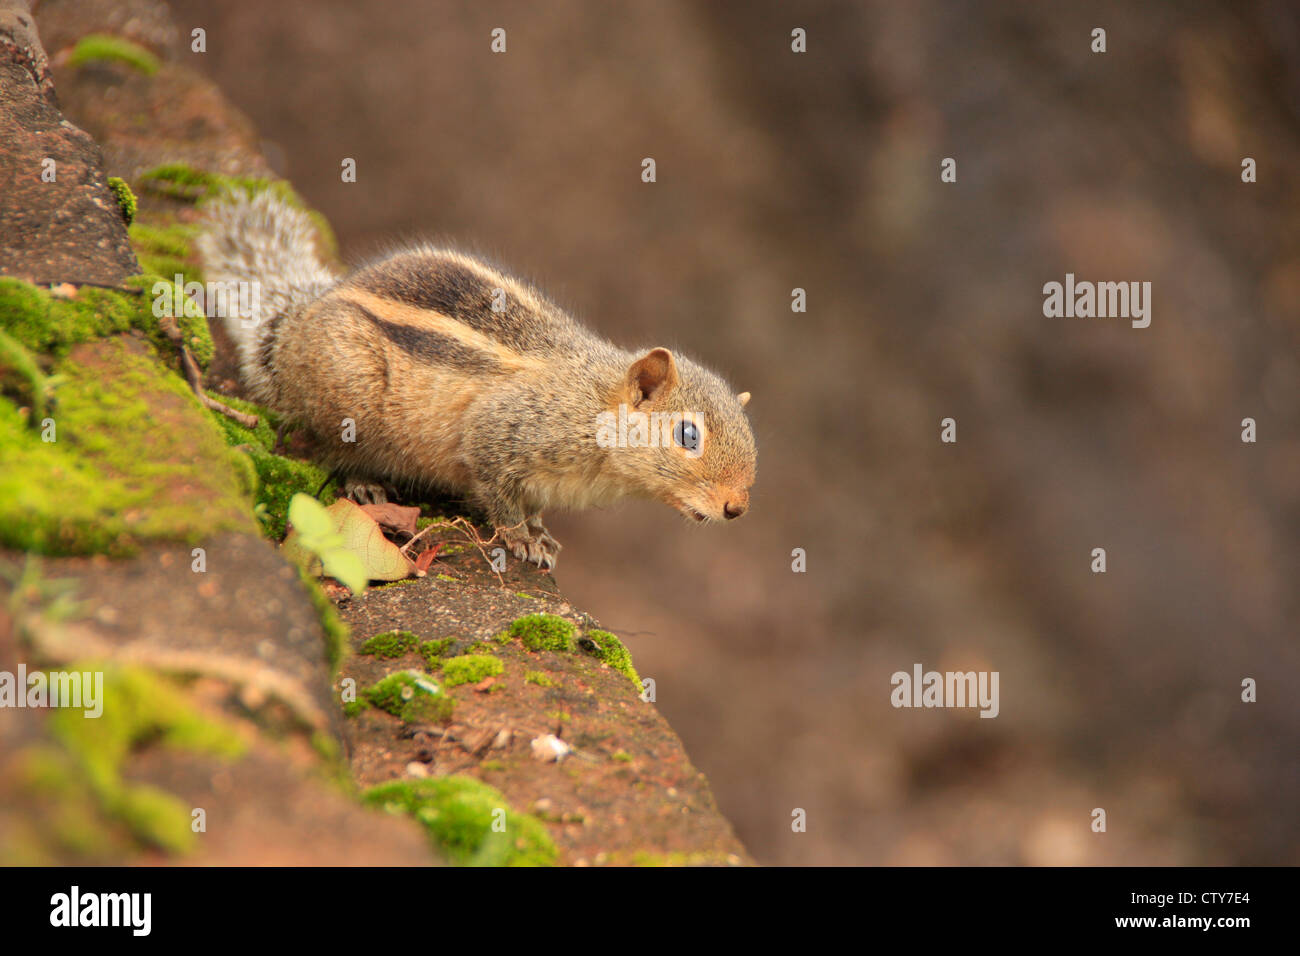 Nothern palm squirrel (Funambulus pennantii) sitting on stone wall Stock Photo